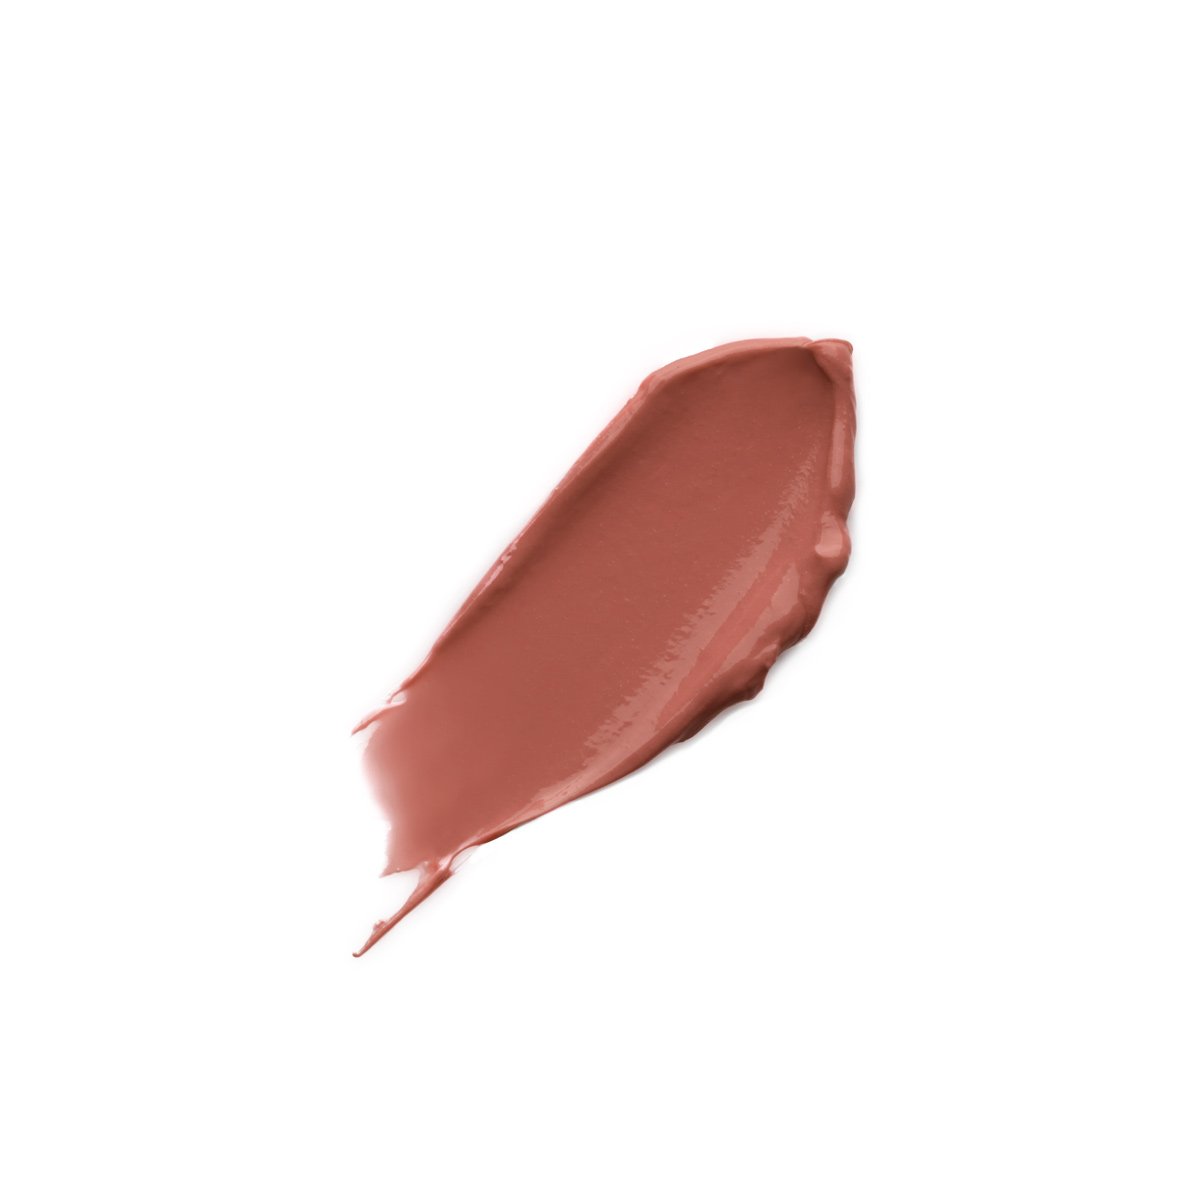 BANDY - PERFECT WARM ROSE - warm rose lipstick lip balm